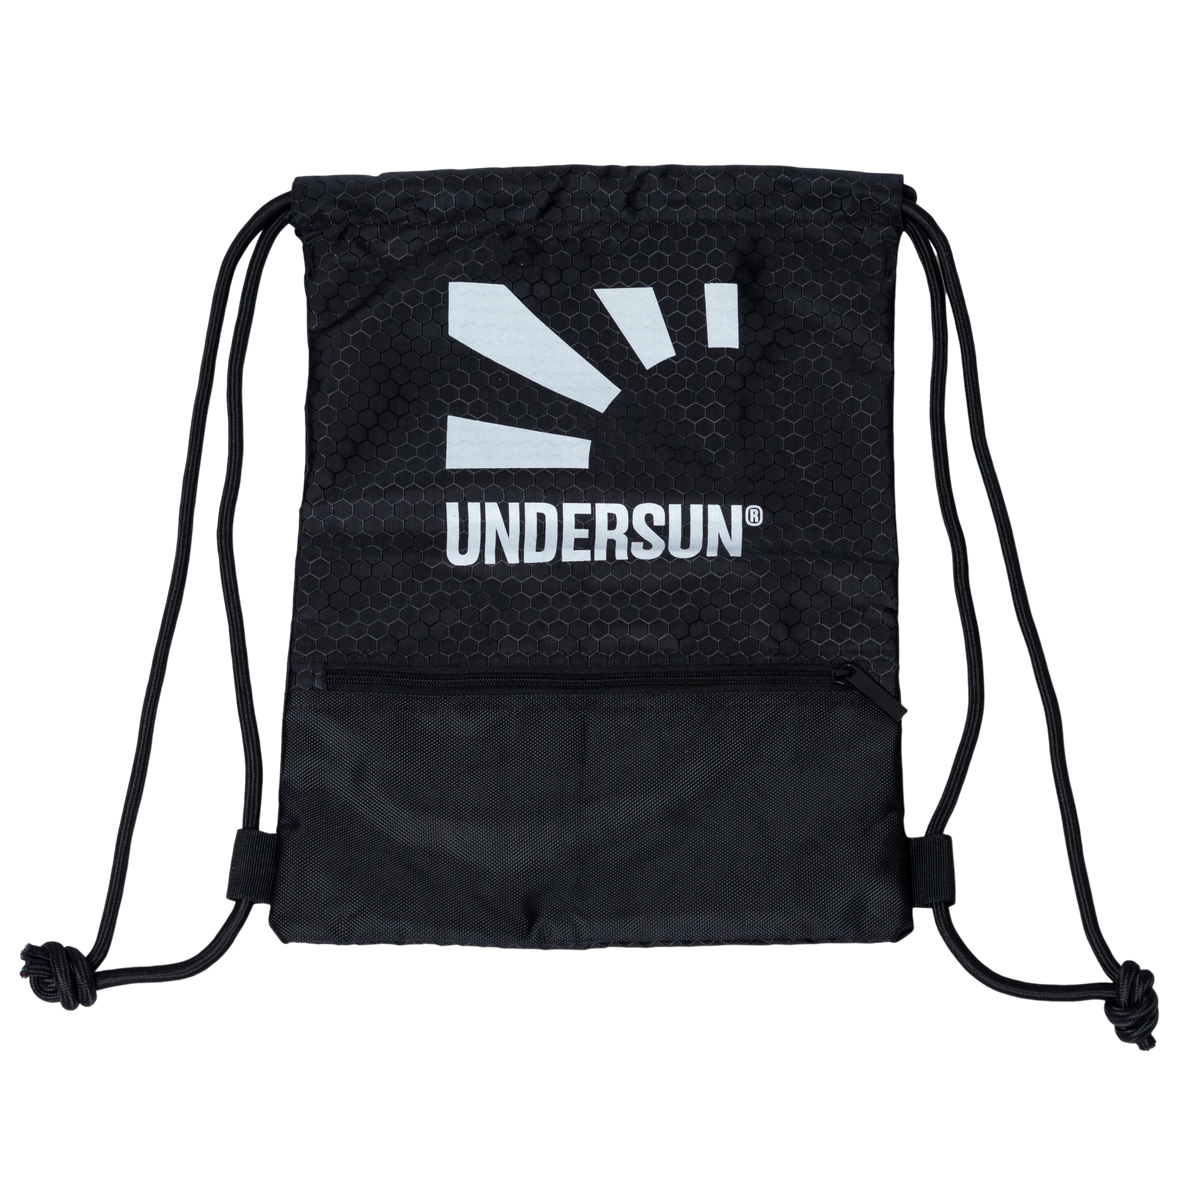 Undersun Premium Nylon Carry Bag - Black - Undersun Fitness 